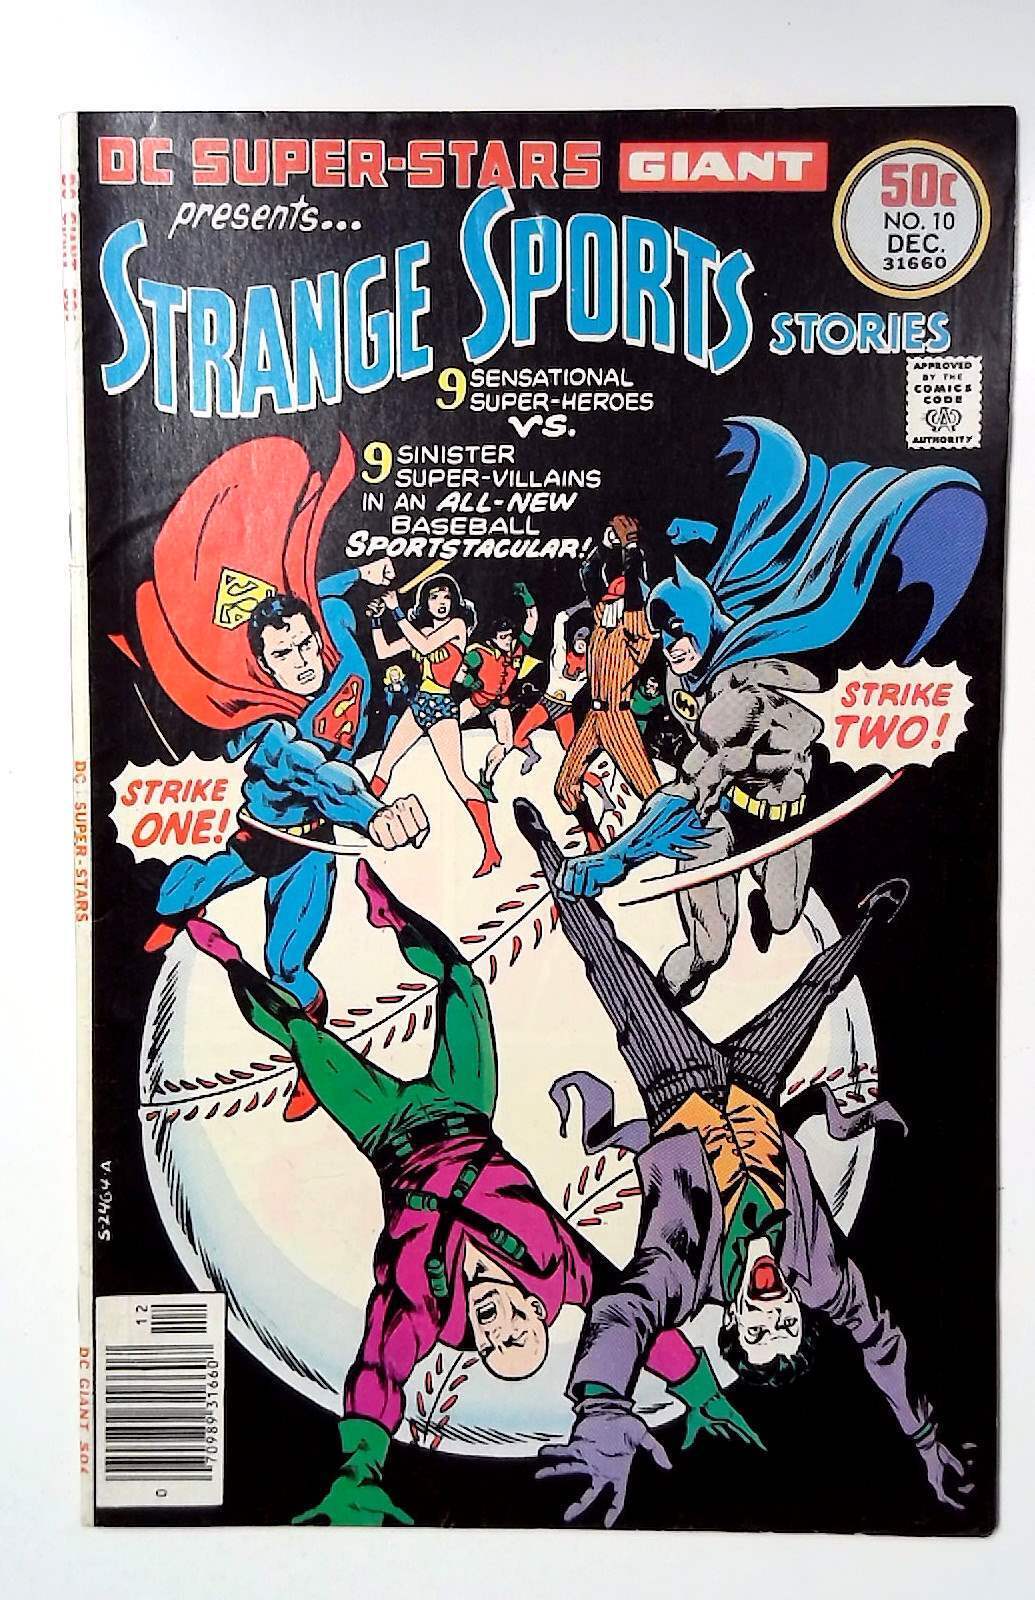 DC Super Stars #10 DC Comics (1976) Strange Sports Stories 1st Print Comic Book